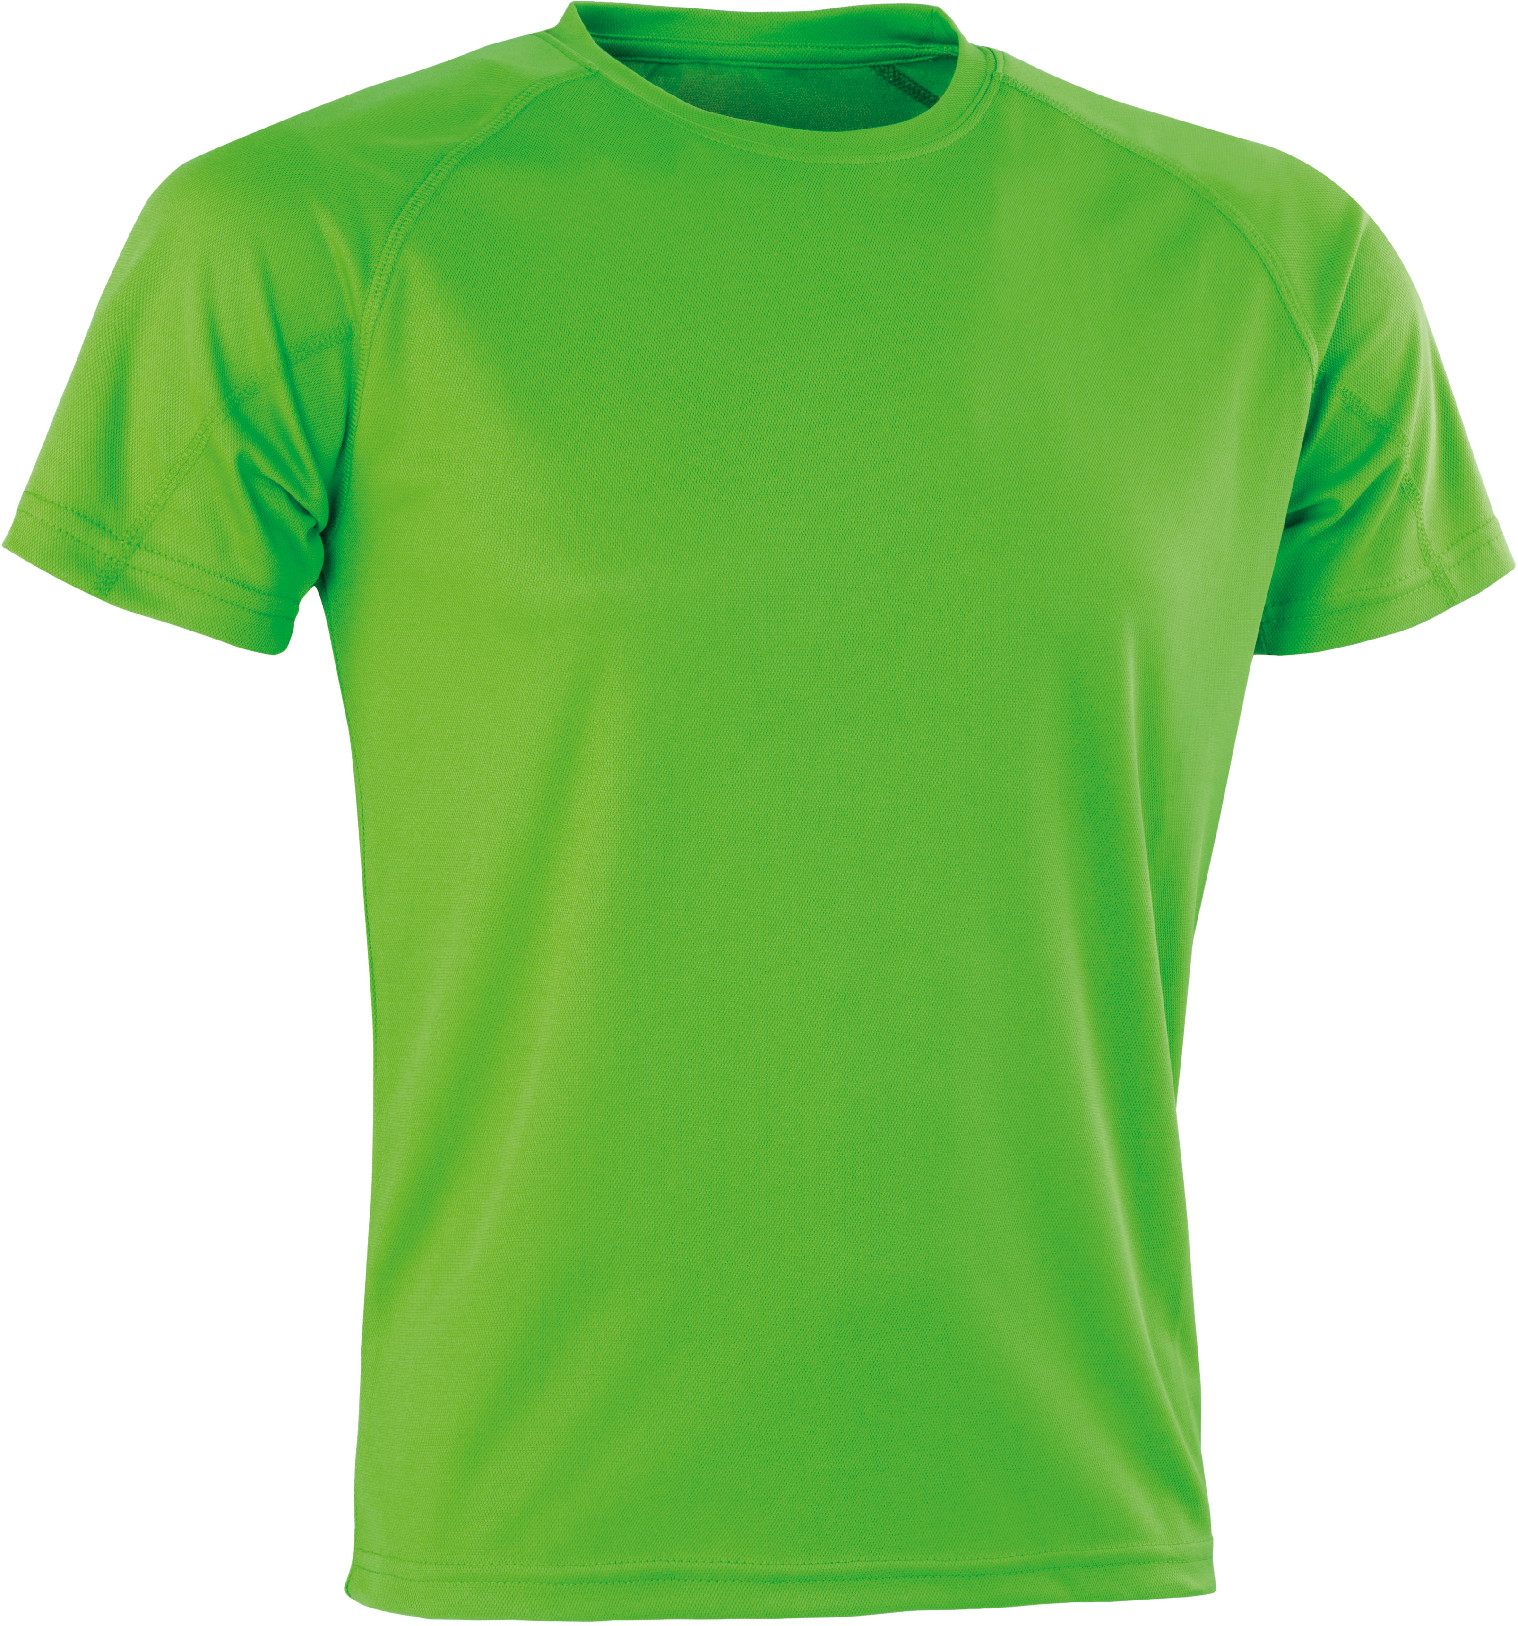 Sportovní tričko Aircool S287X Barva: limetková, Velikost: M